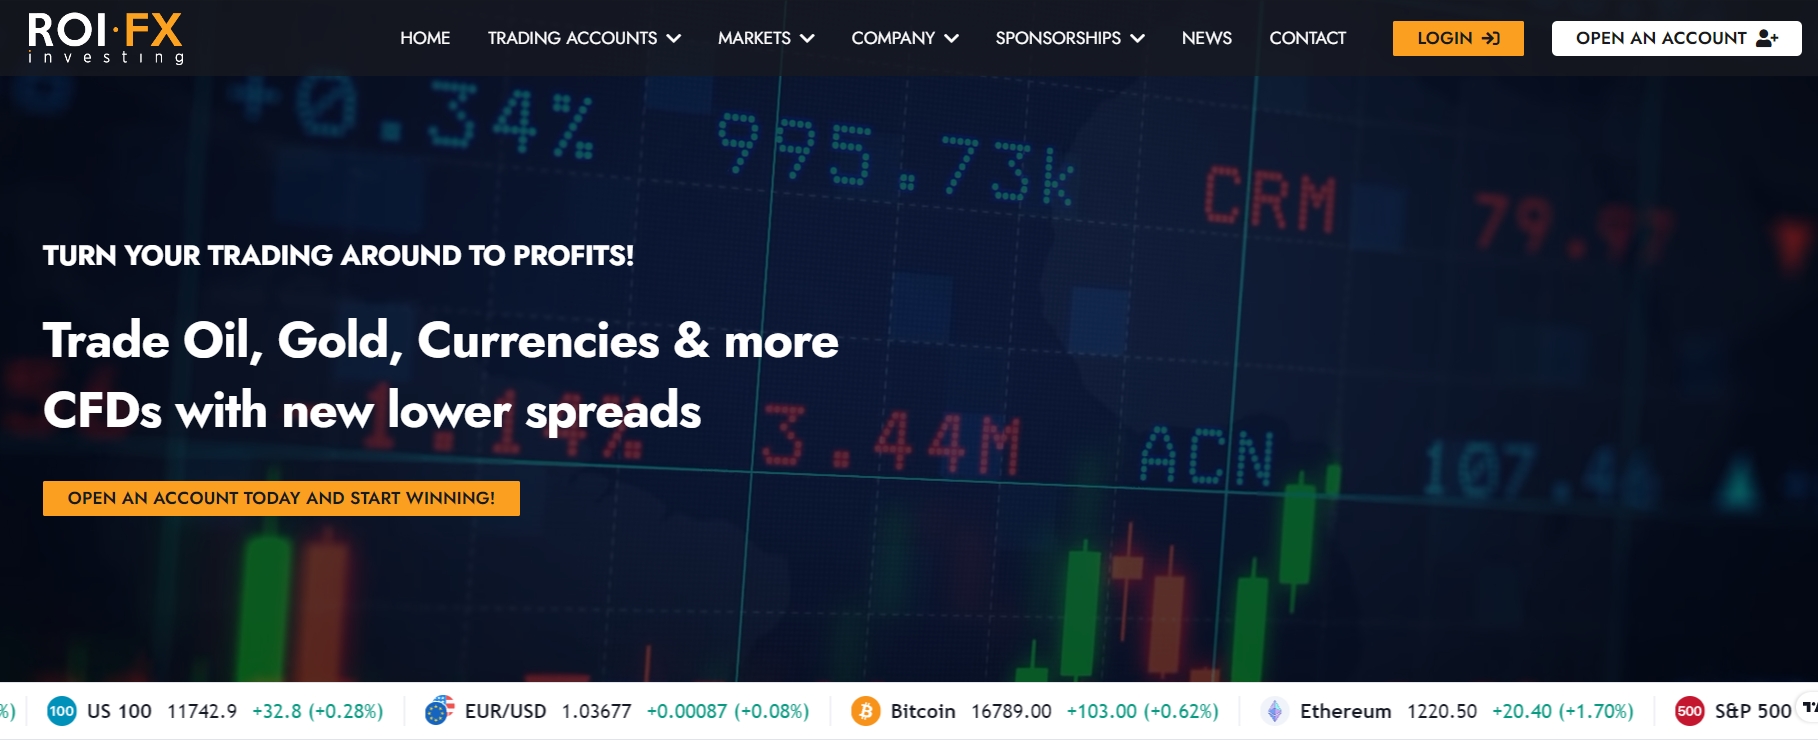 ROIFX Trader homepage